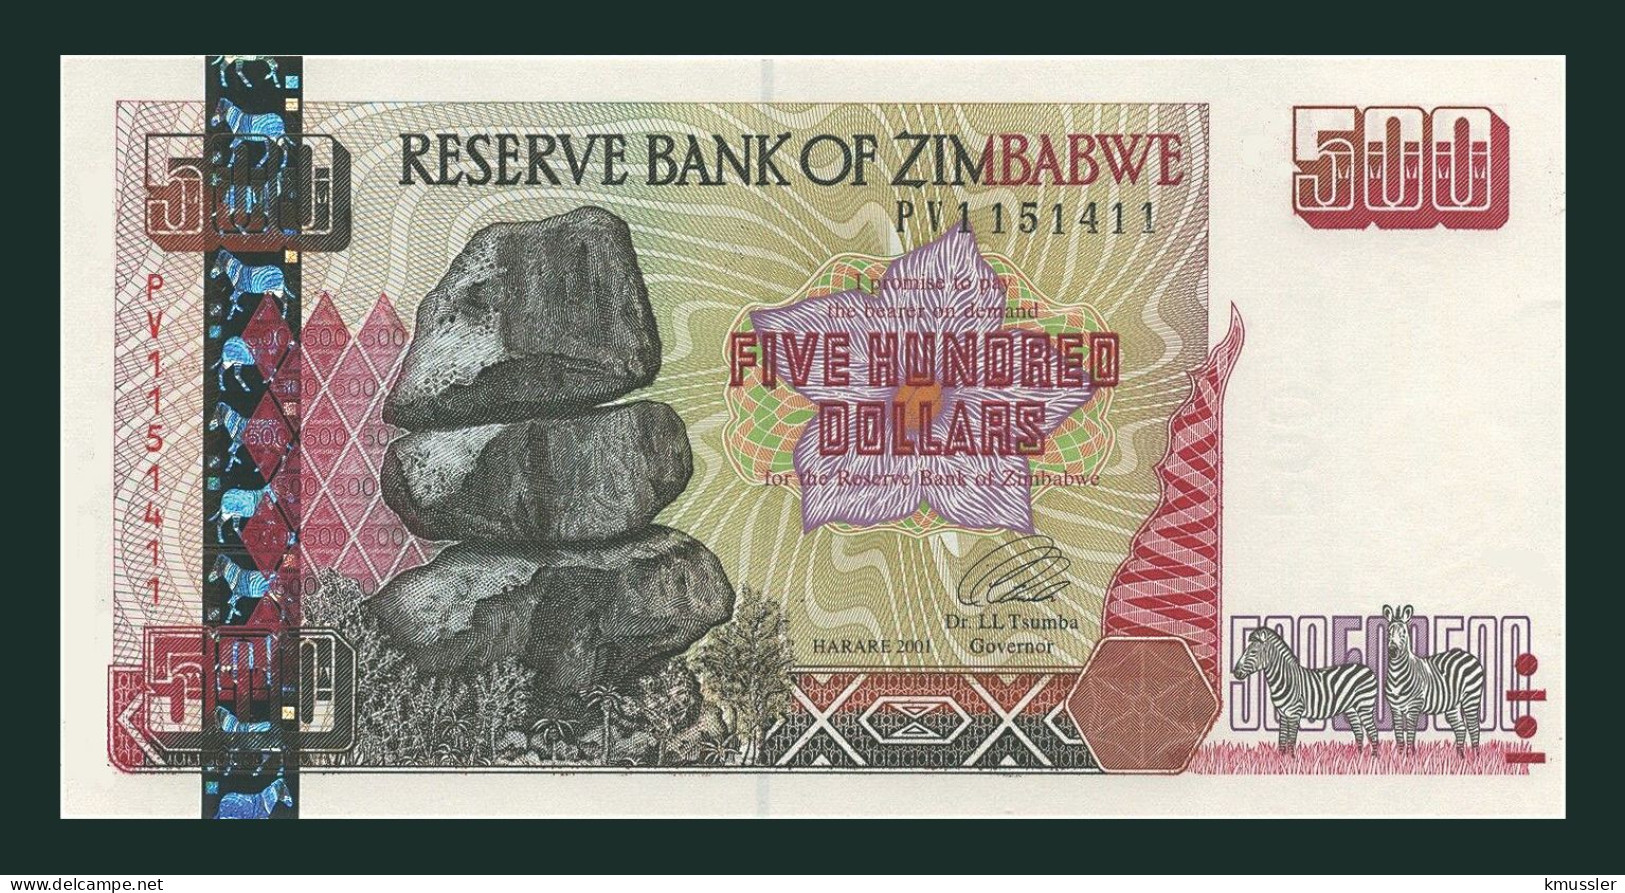 # # # Banknote Simbabwe (Zimbabwe) 500 Dollars 2002 (P-11) UNC # # # - Simbabwe